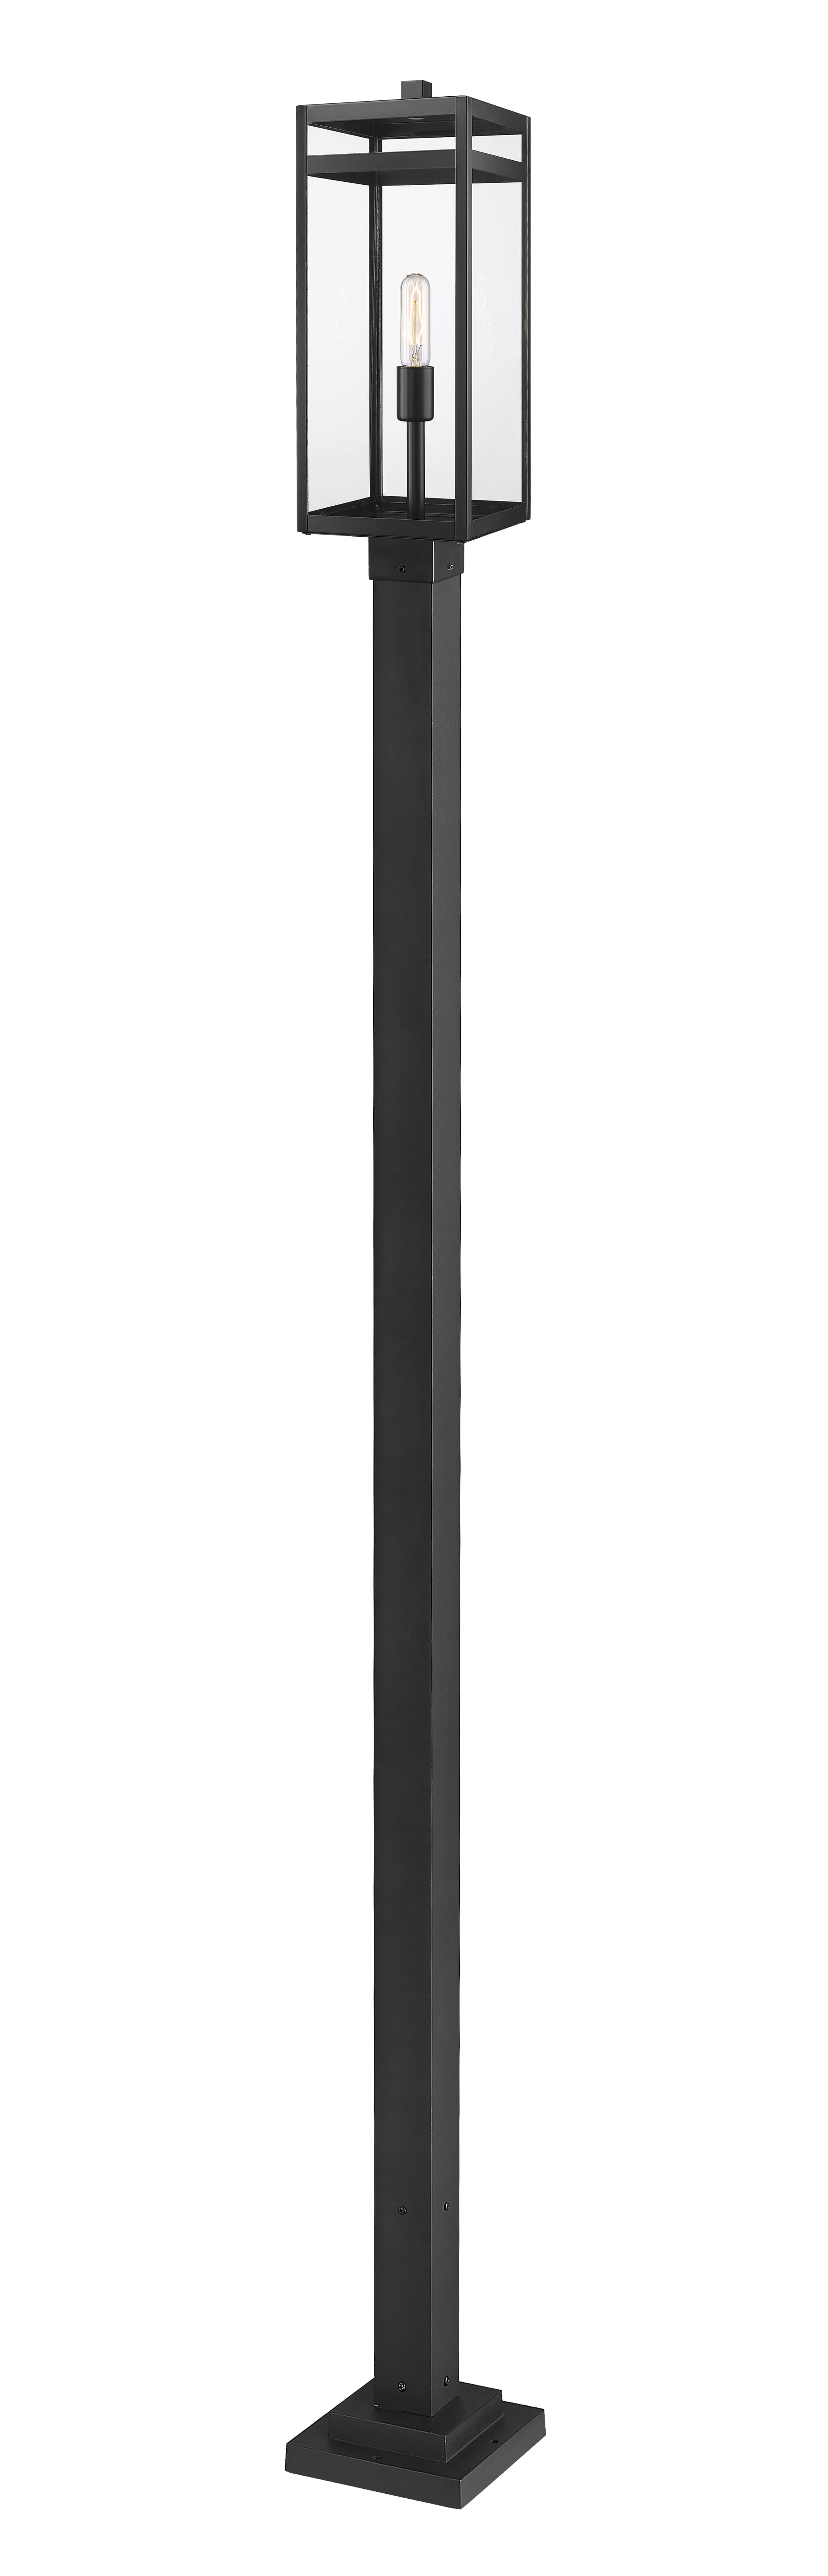 Nuri 1-Light Outdoor Post Mounted Fixture Light In Black